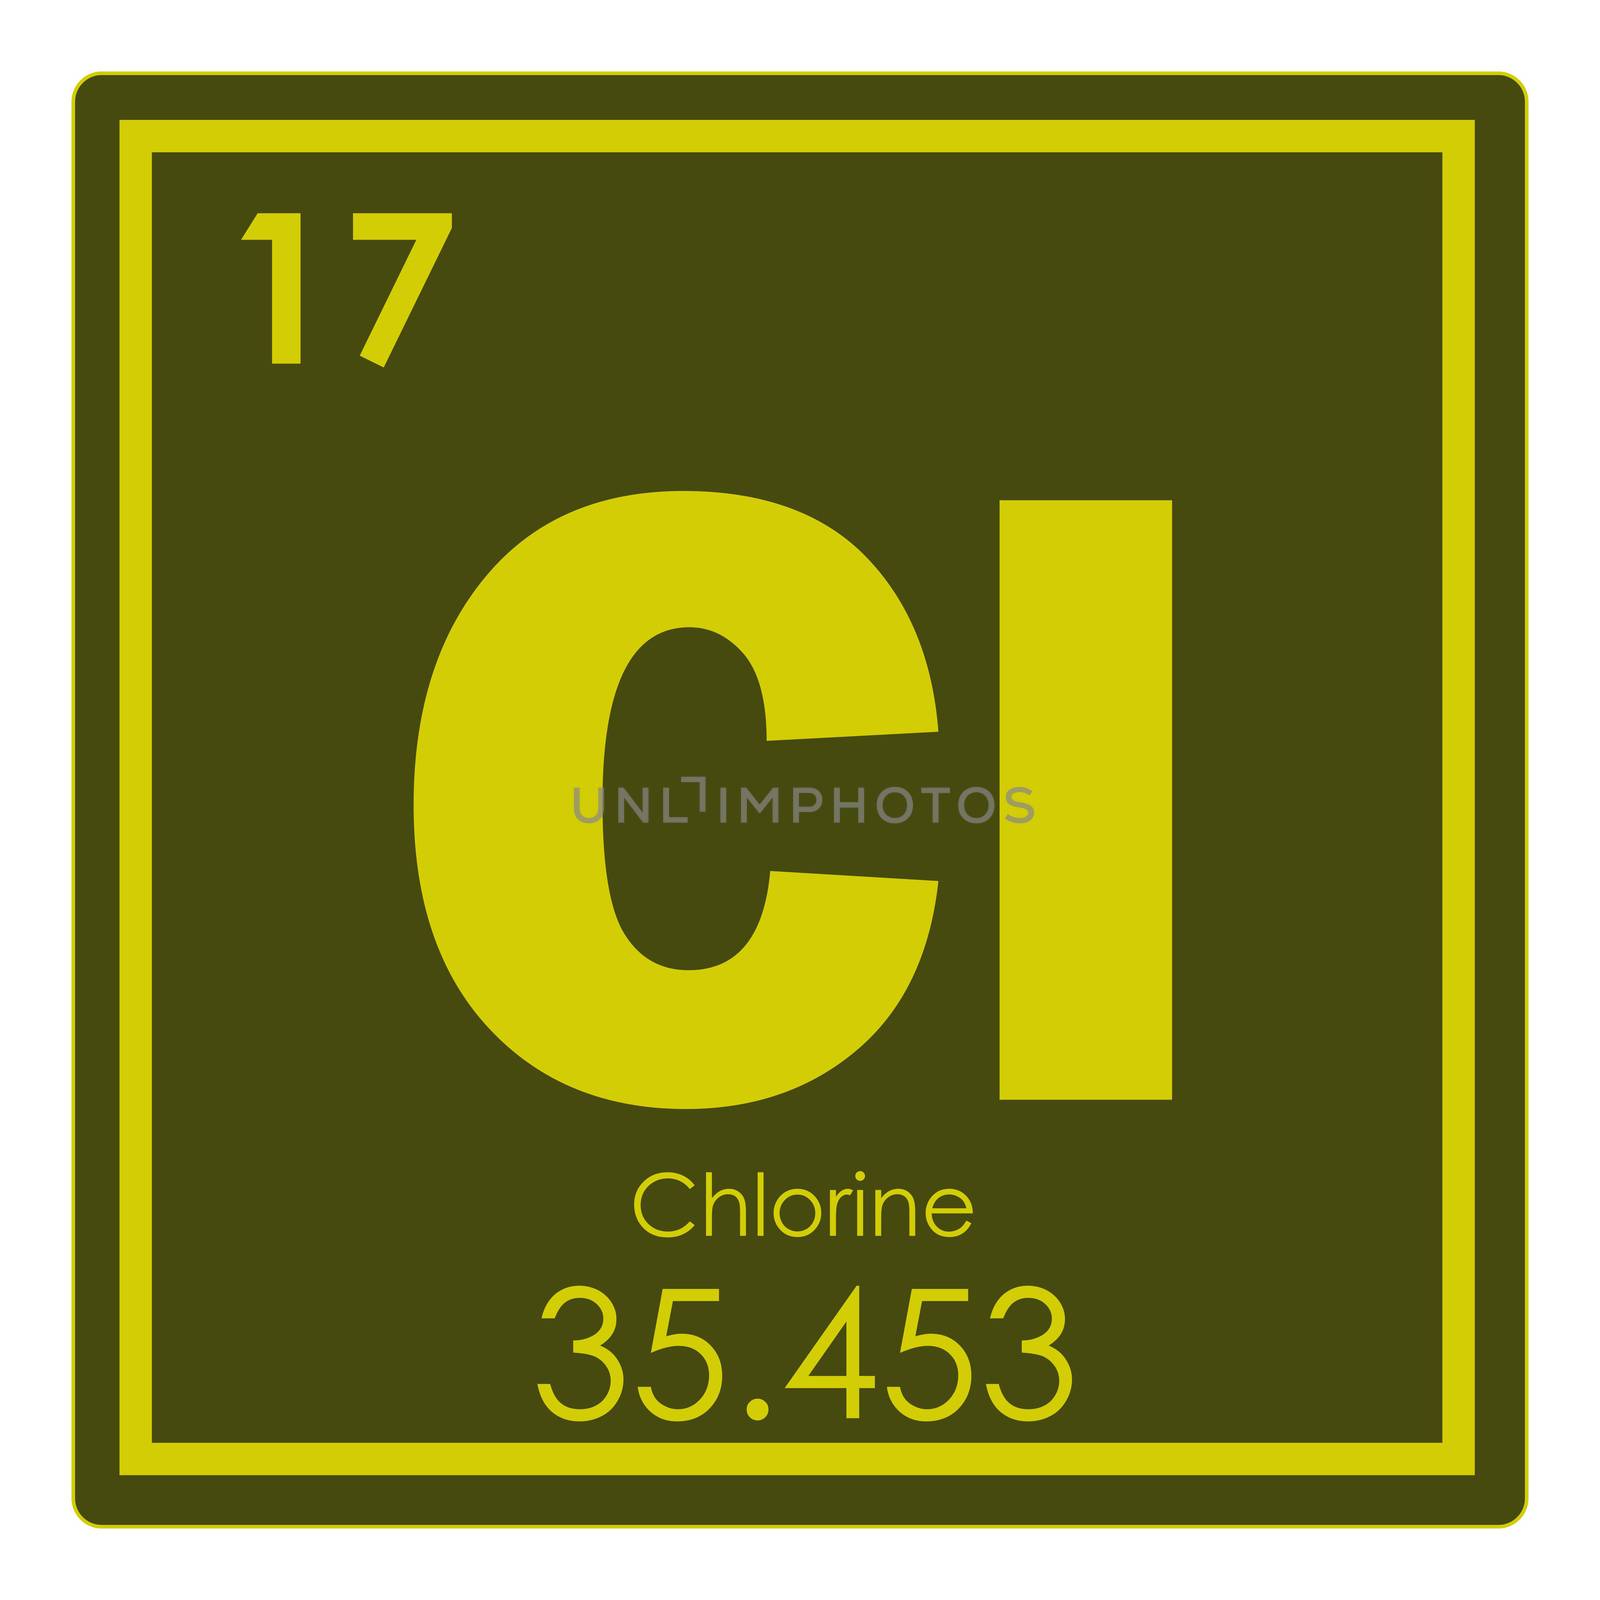 Chlorine chemical element by tony4urban